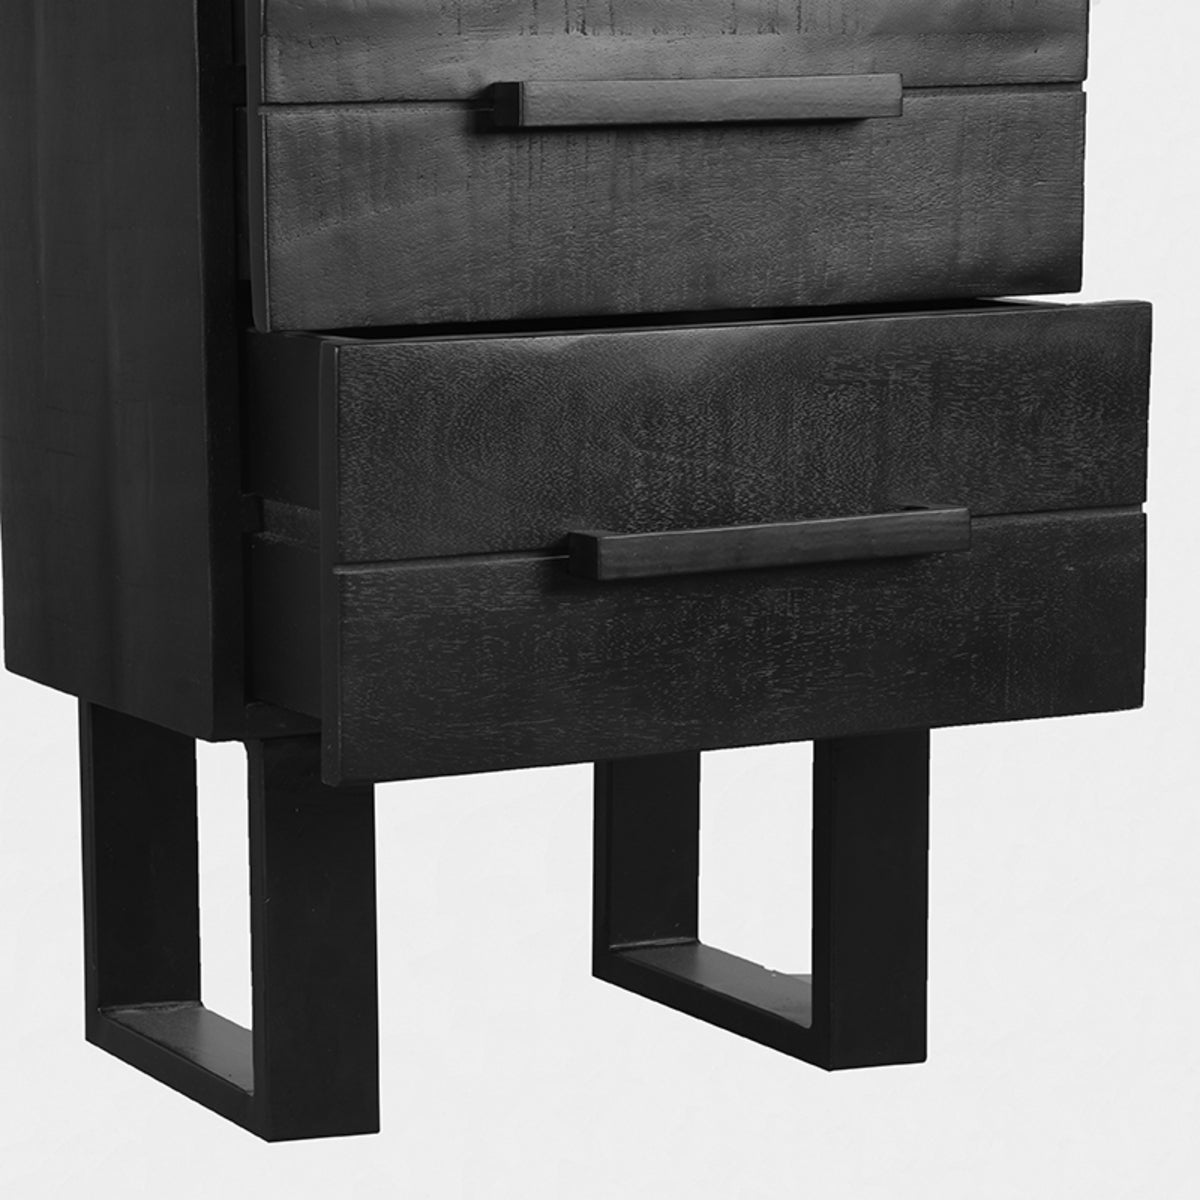 LABEL51 Santos chest of drawers - Black - Mango wood